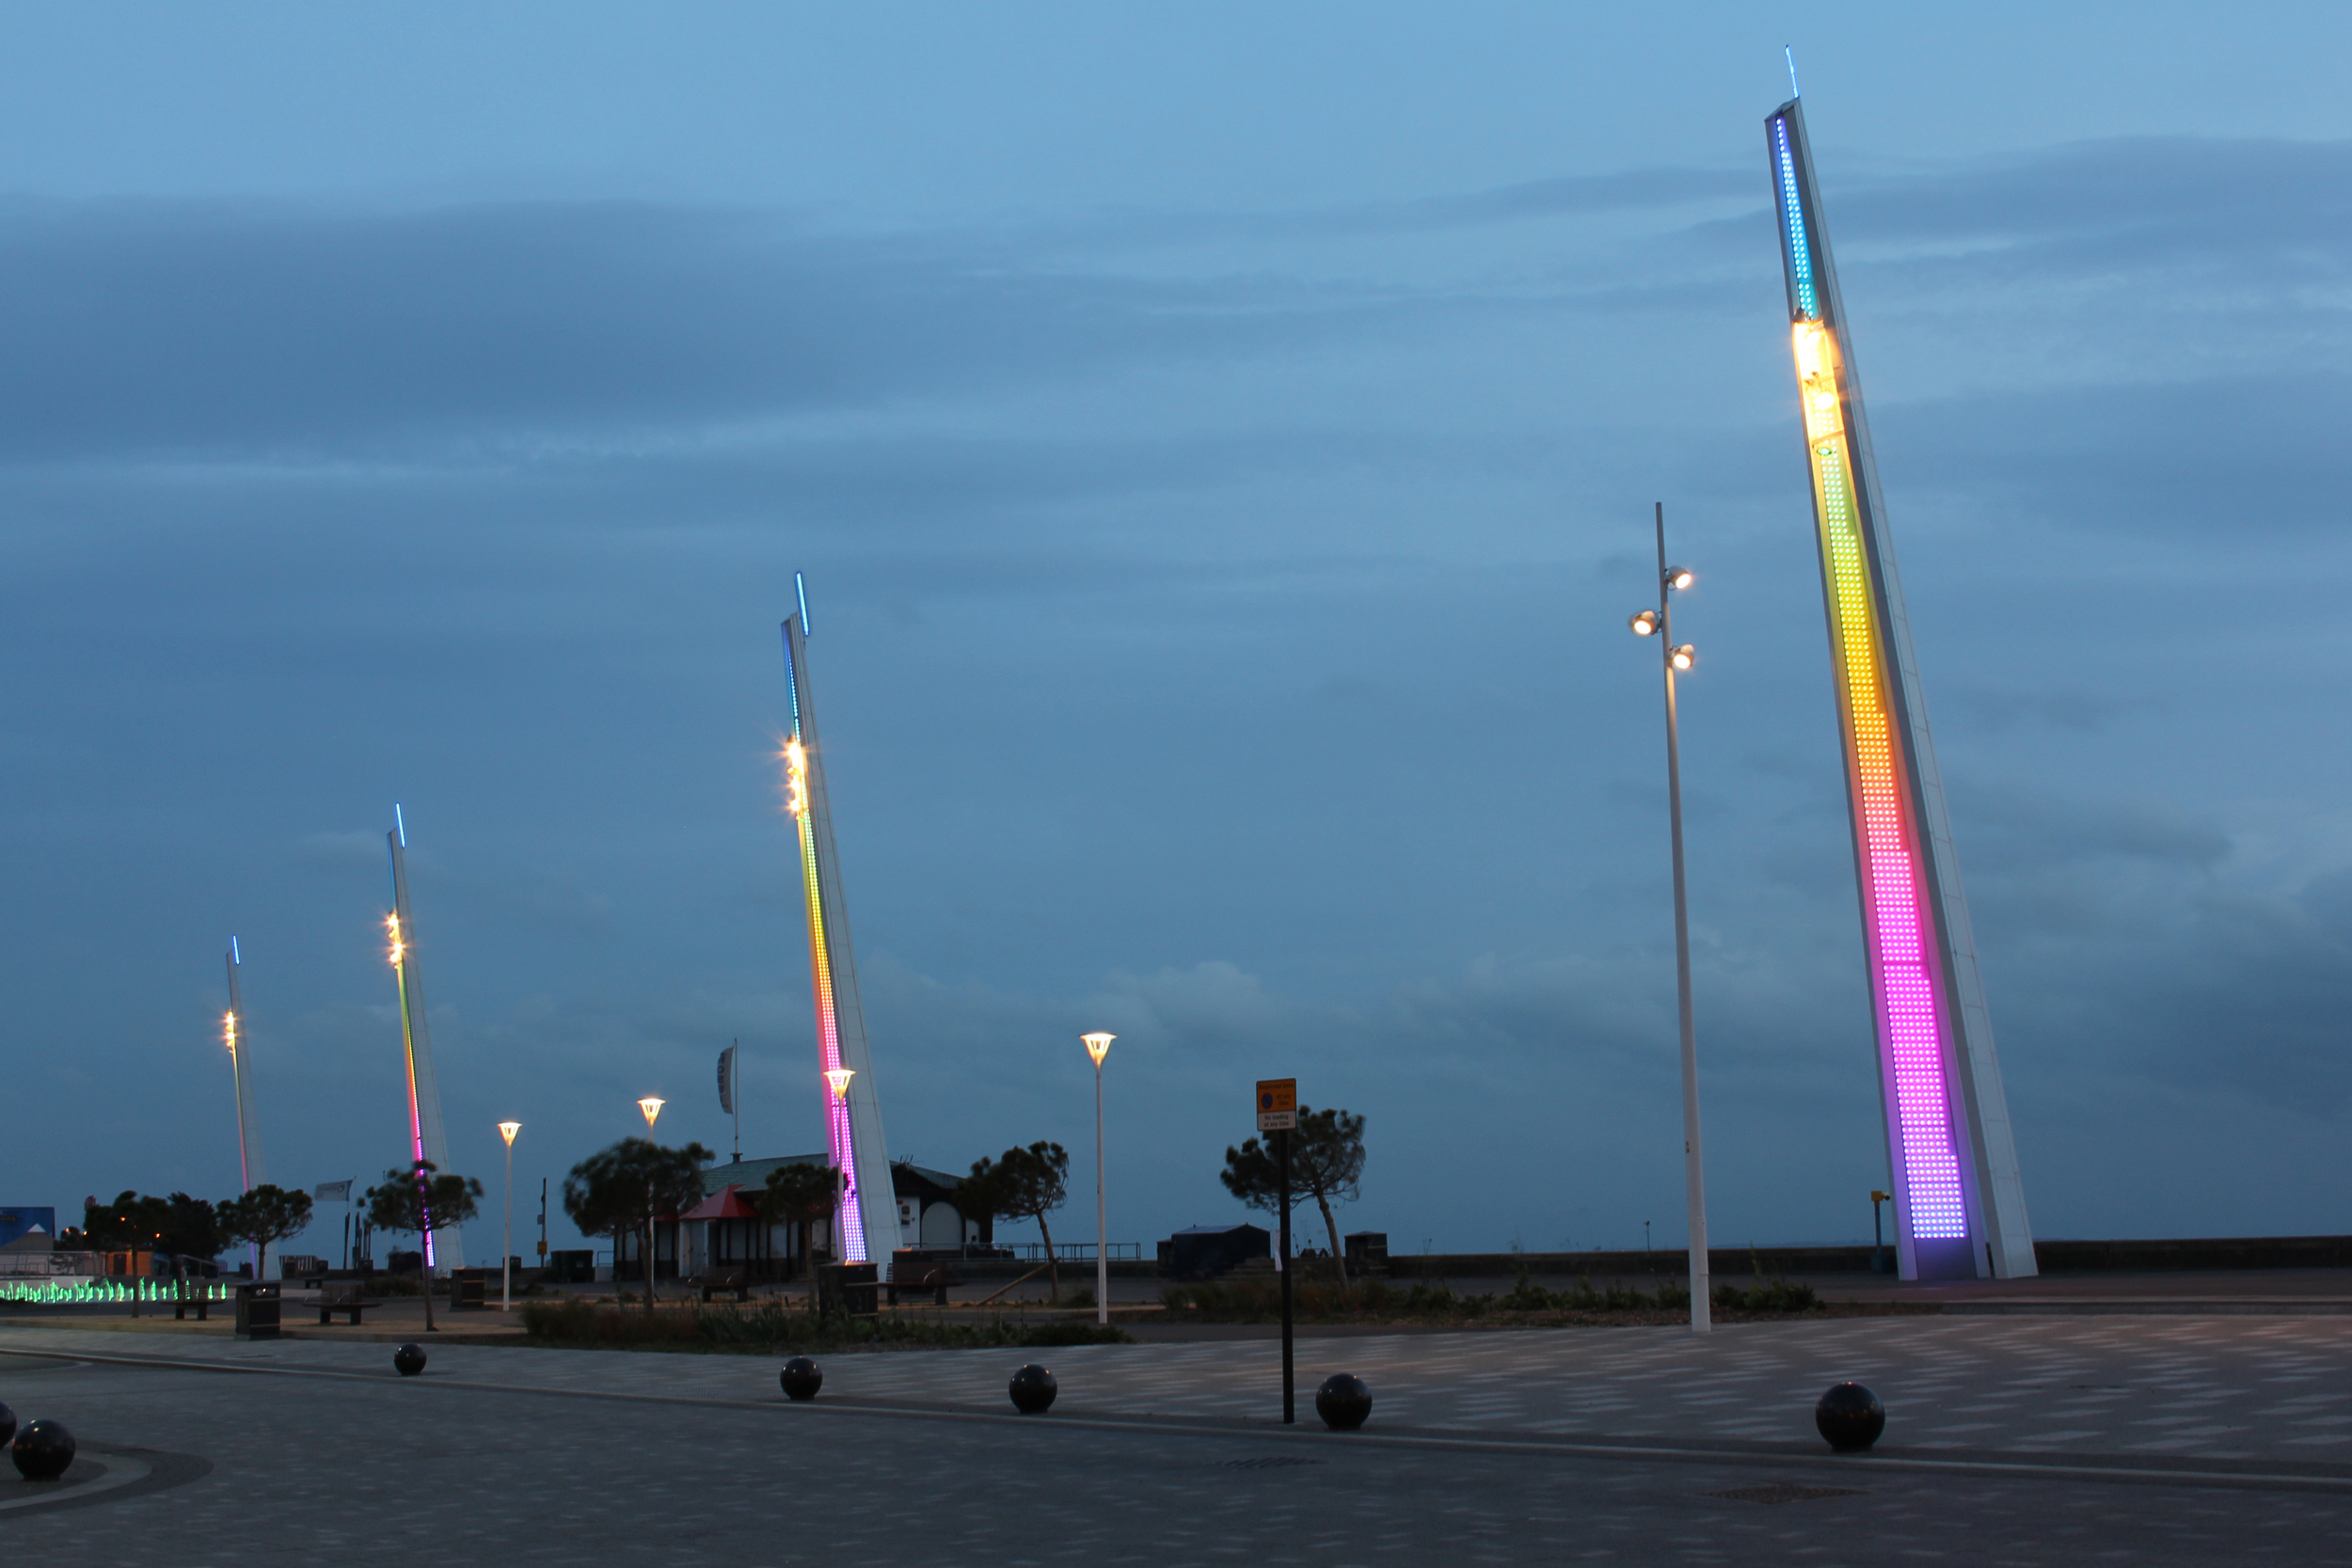   Pinniger Lighting Design  /  Southend-On-Sea City Beach 2011  